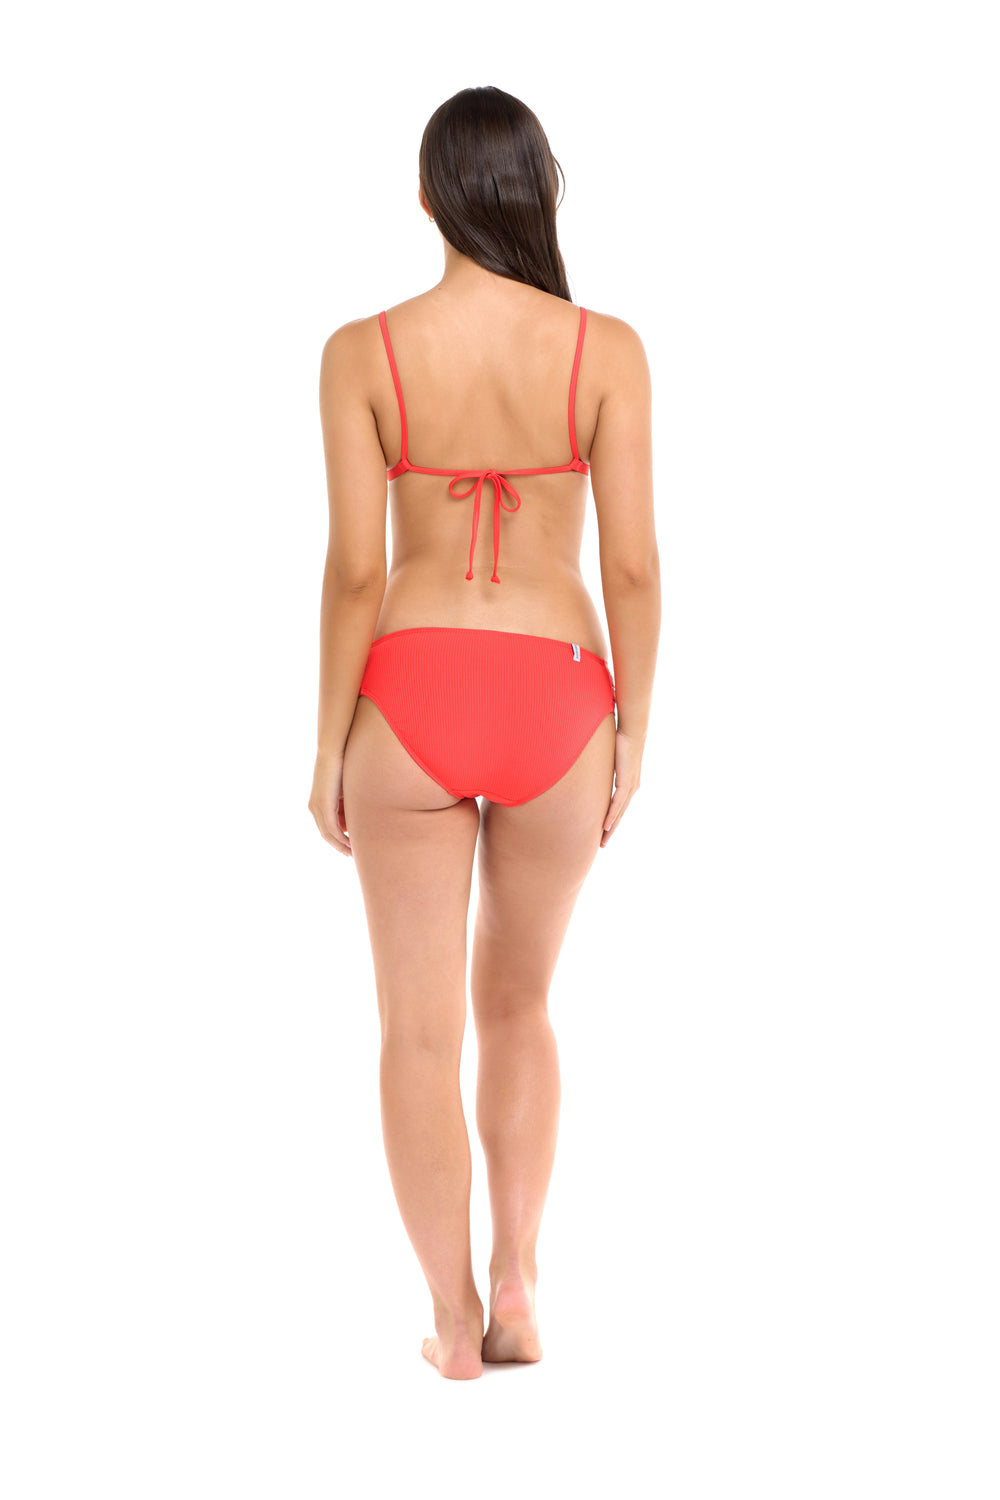 Body Glove Ibiza Evelyn Fixed Triangle Bikini Top - Snapdragon